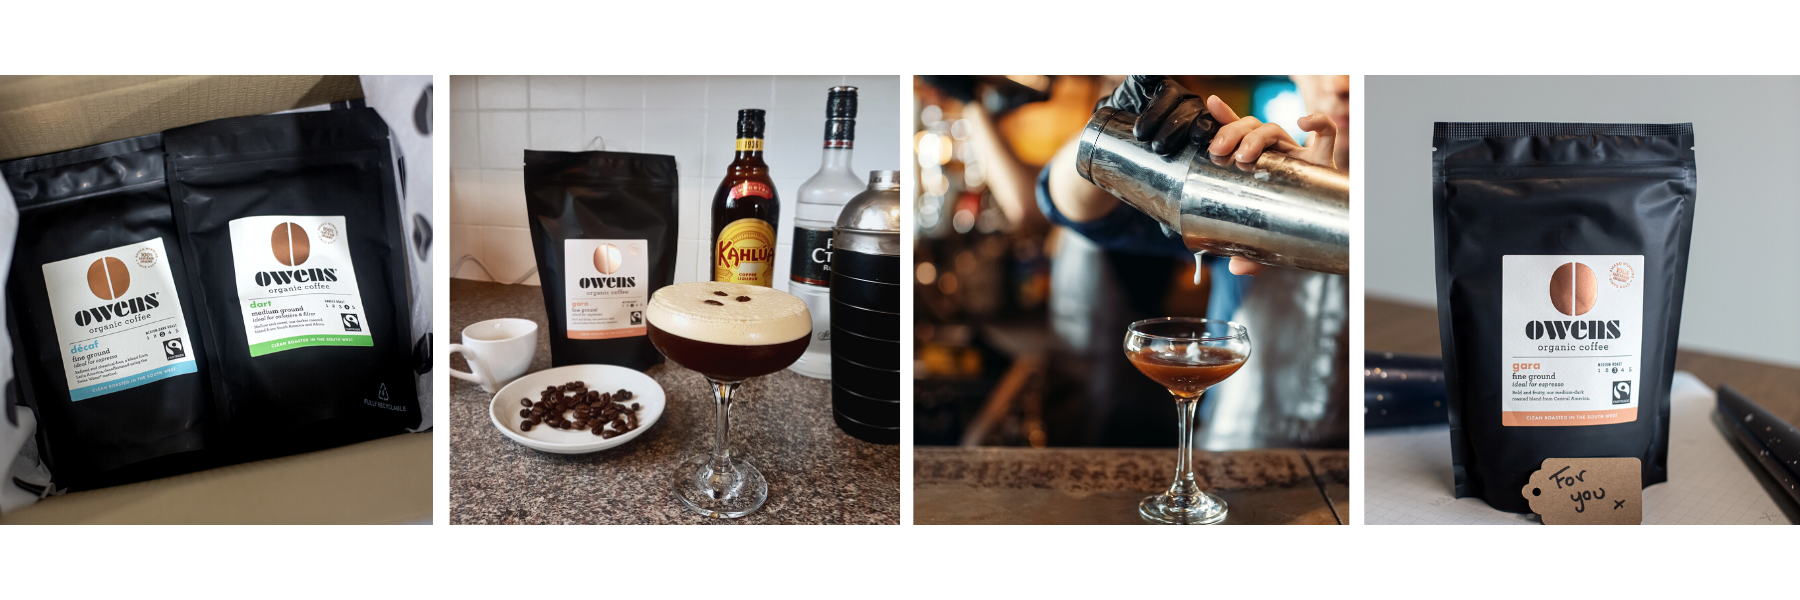 Espresso Vodka Drinks: How to Make an Espresso Martini at Home